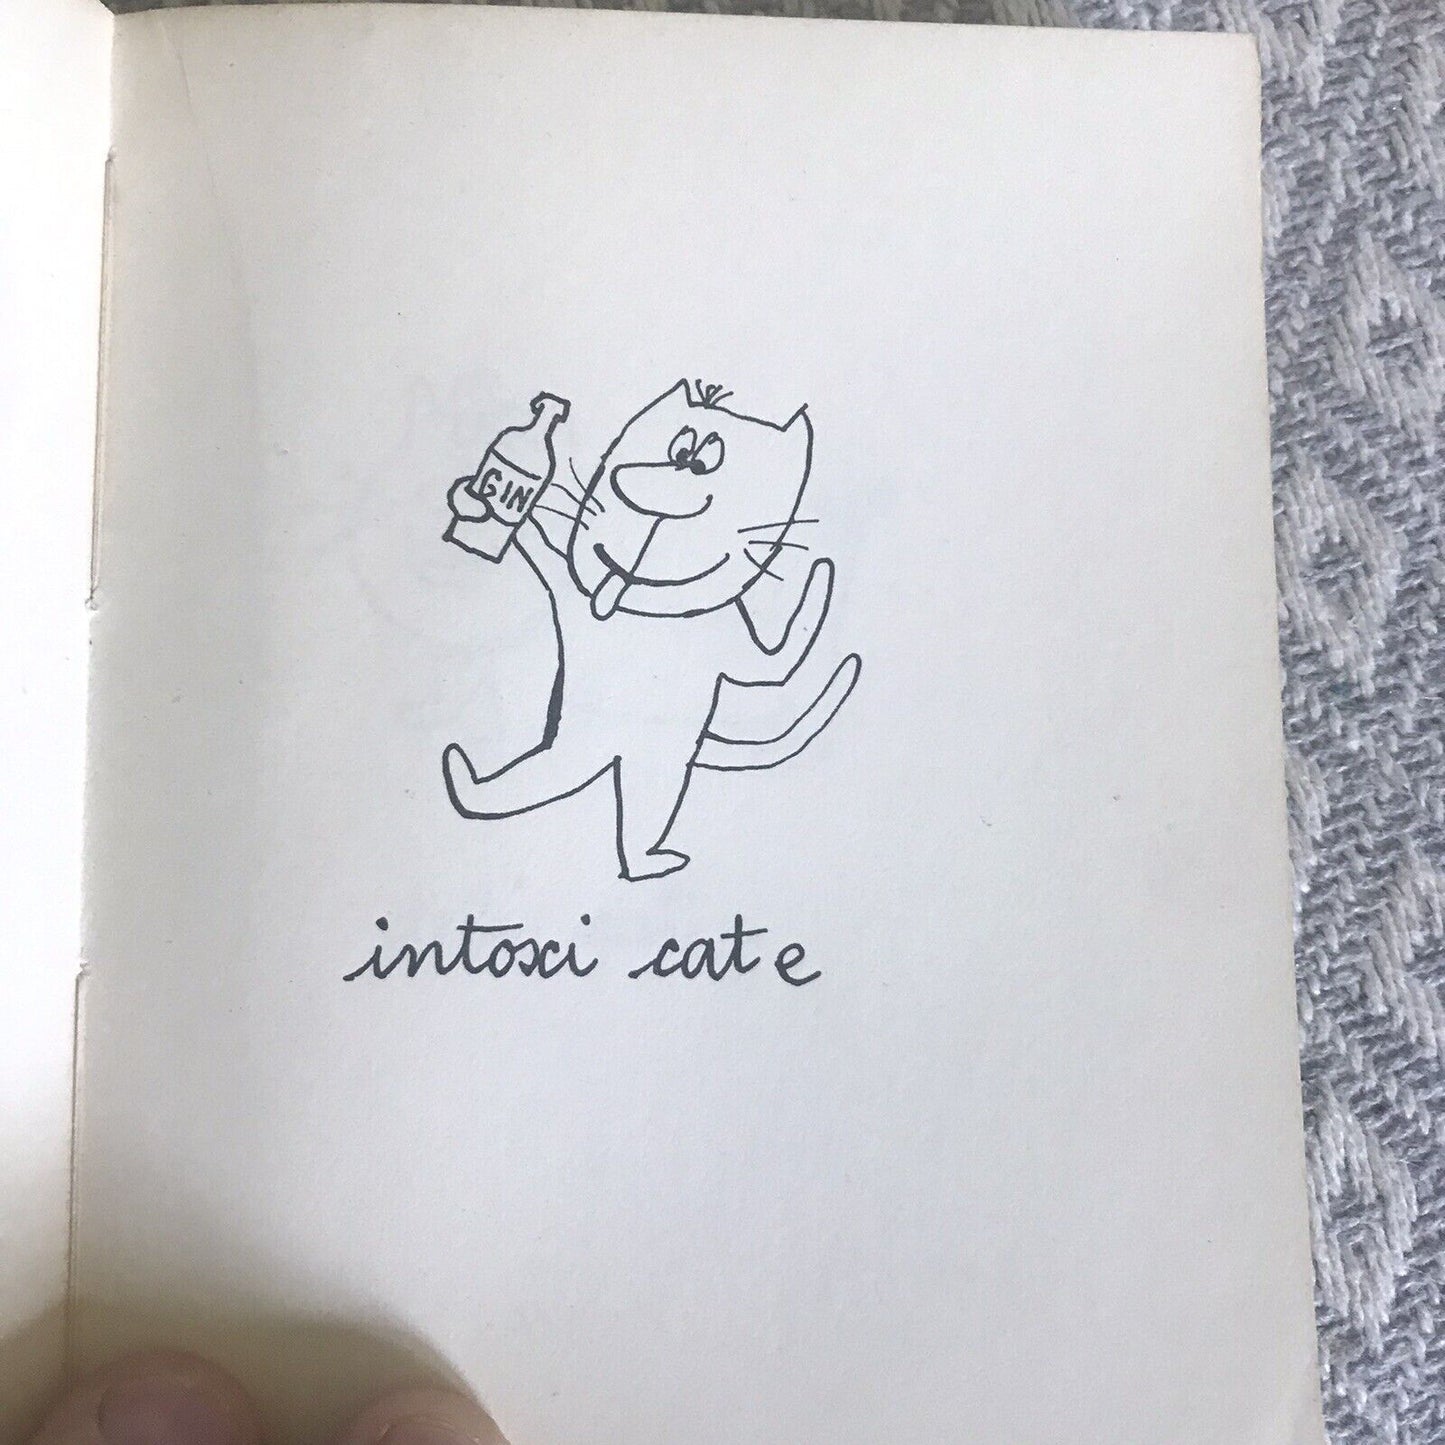 1959 Scatty - Siné (Max Reinhardt Publisher)